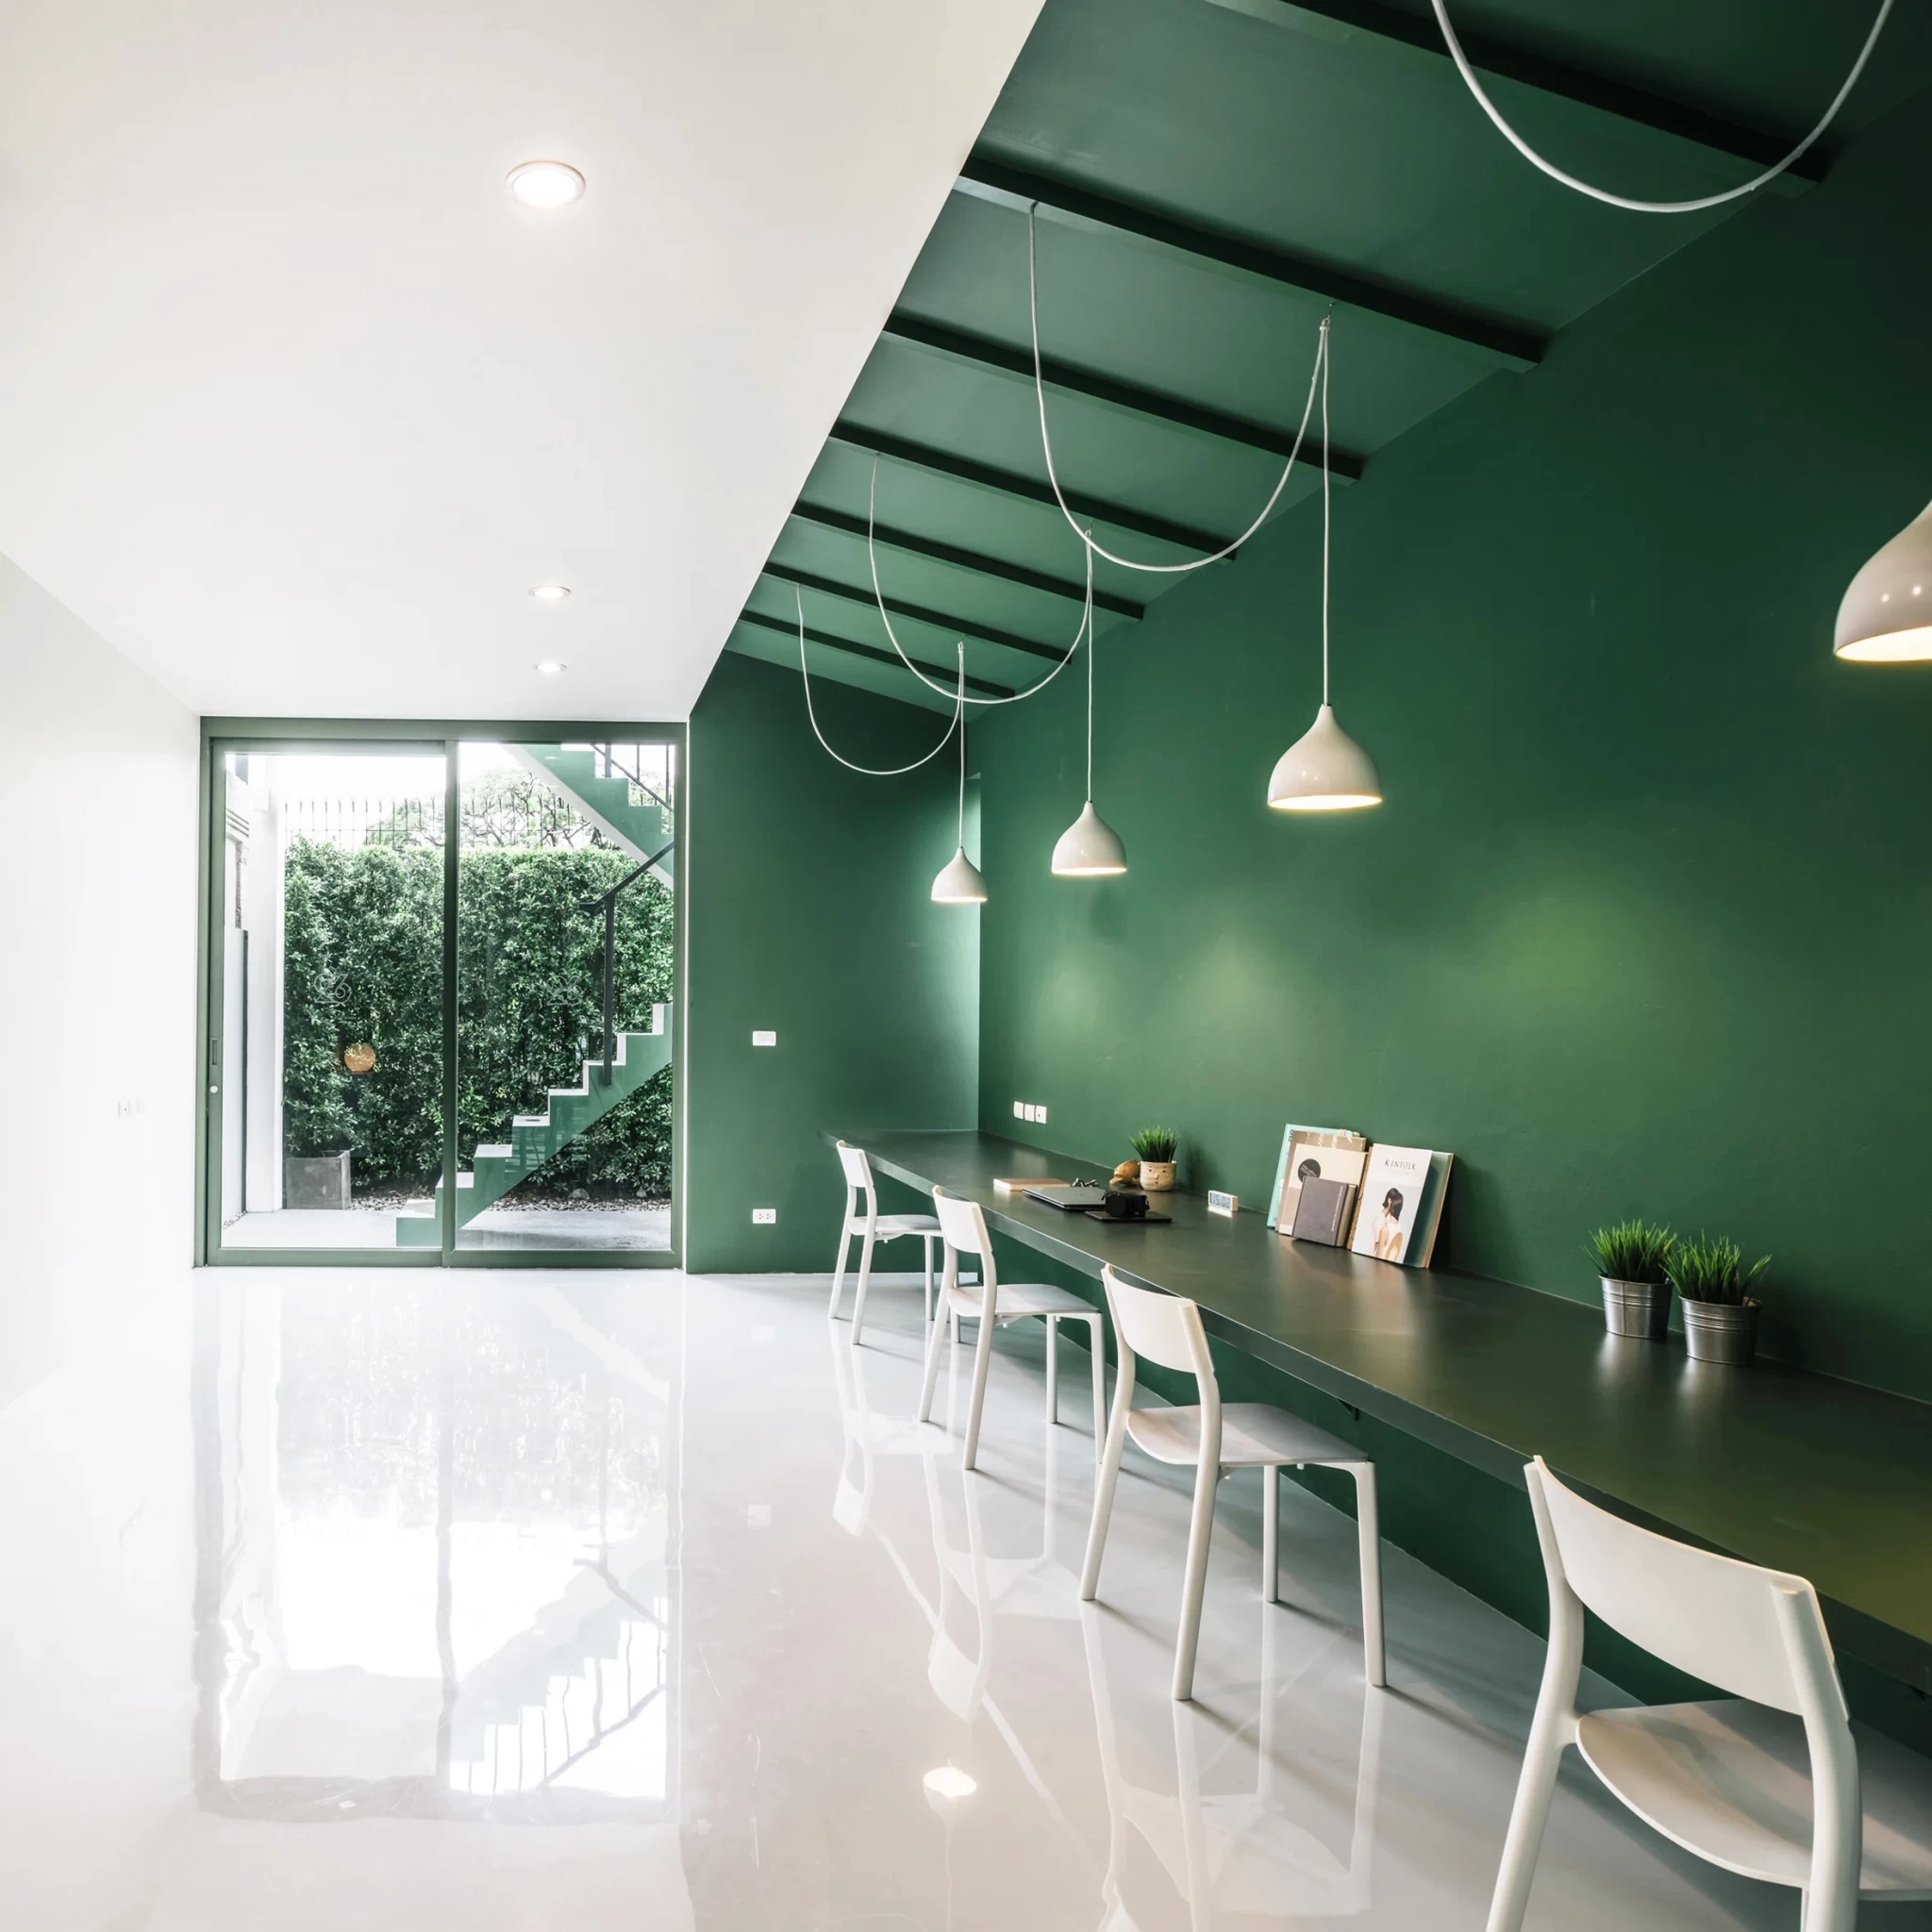 green-26-anonymstudio-workspace-lounge-minimalist-offices-roundup-dezeen-sq.webp